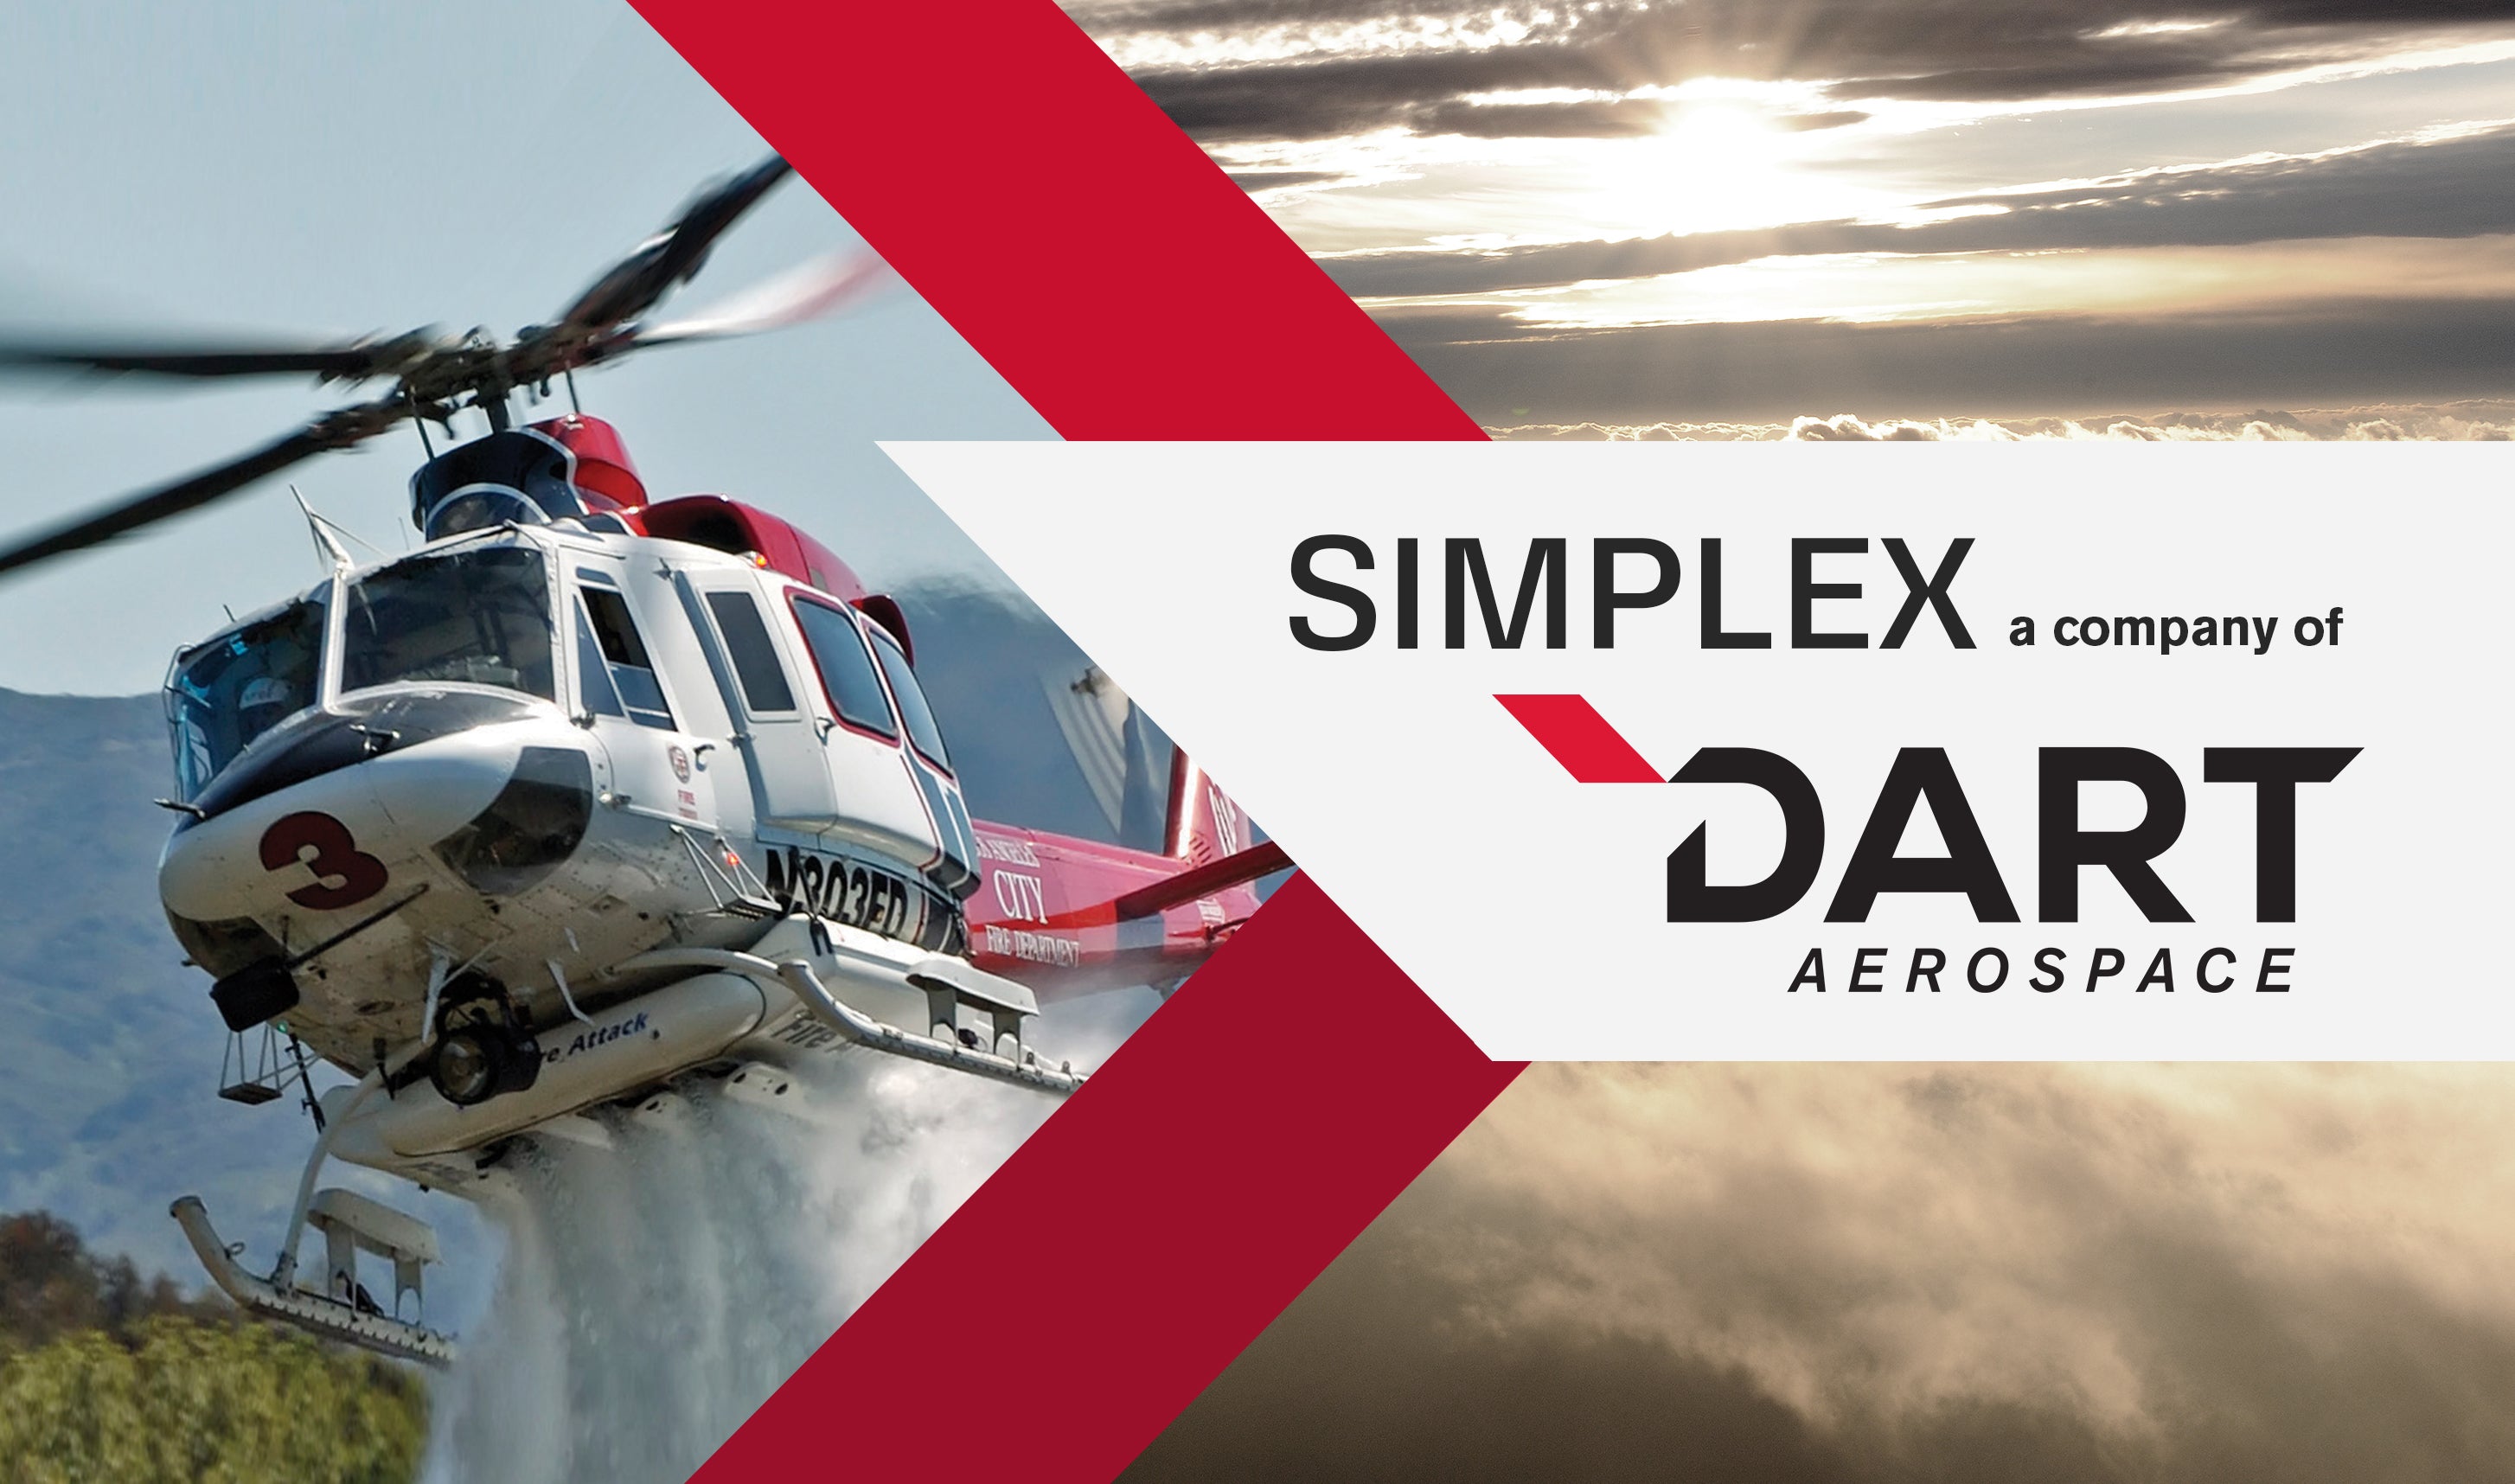 DART Aerospace Acquires Portland-Based Aerial Firefighting Mission Equipment Leader Simplex Aerospace